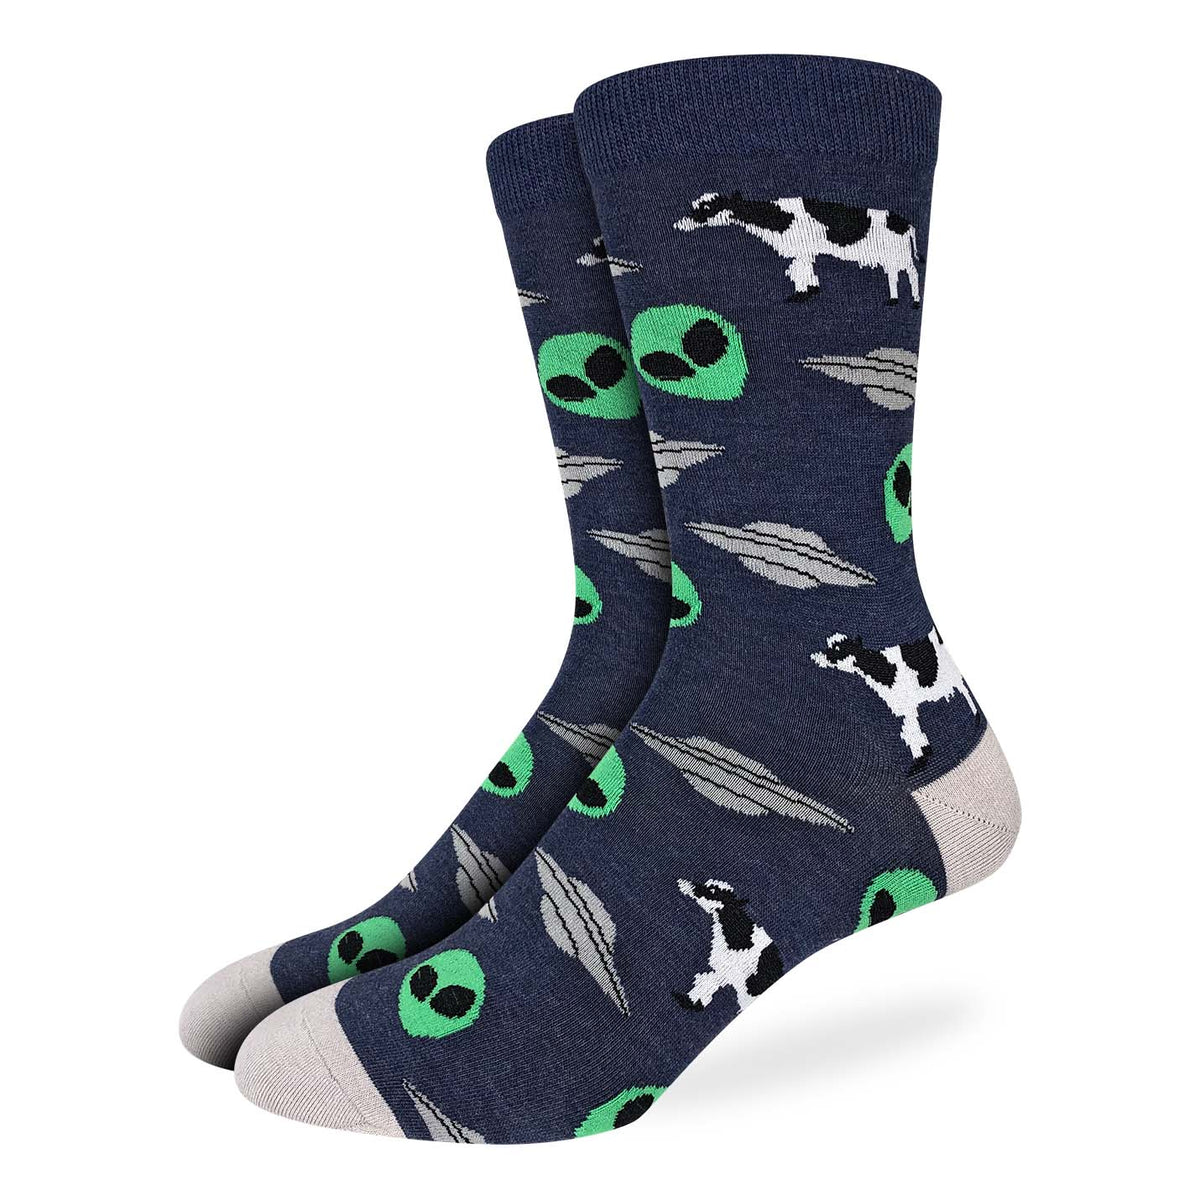 Men's Aliens and Cows Socks